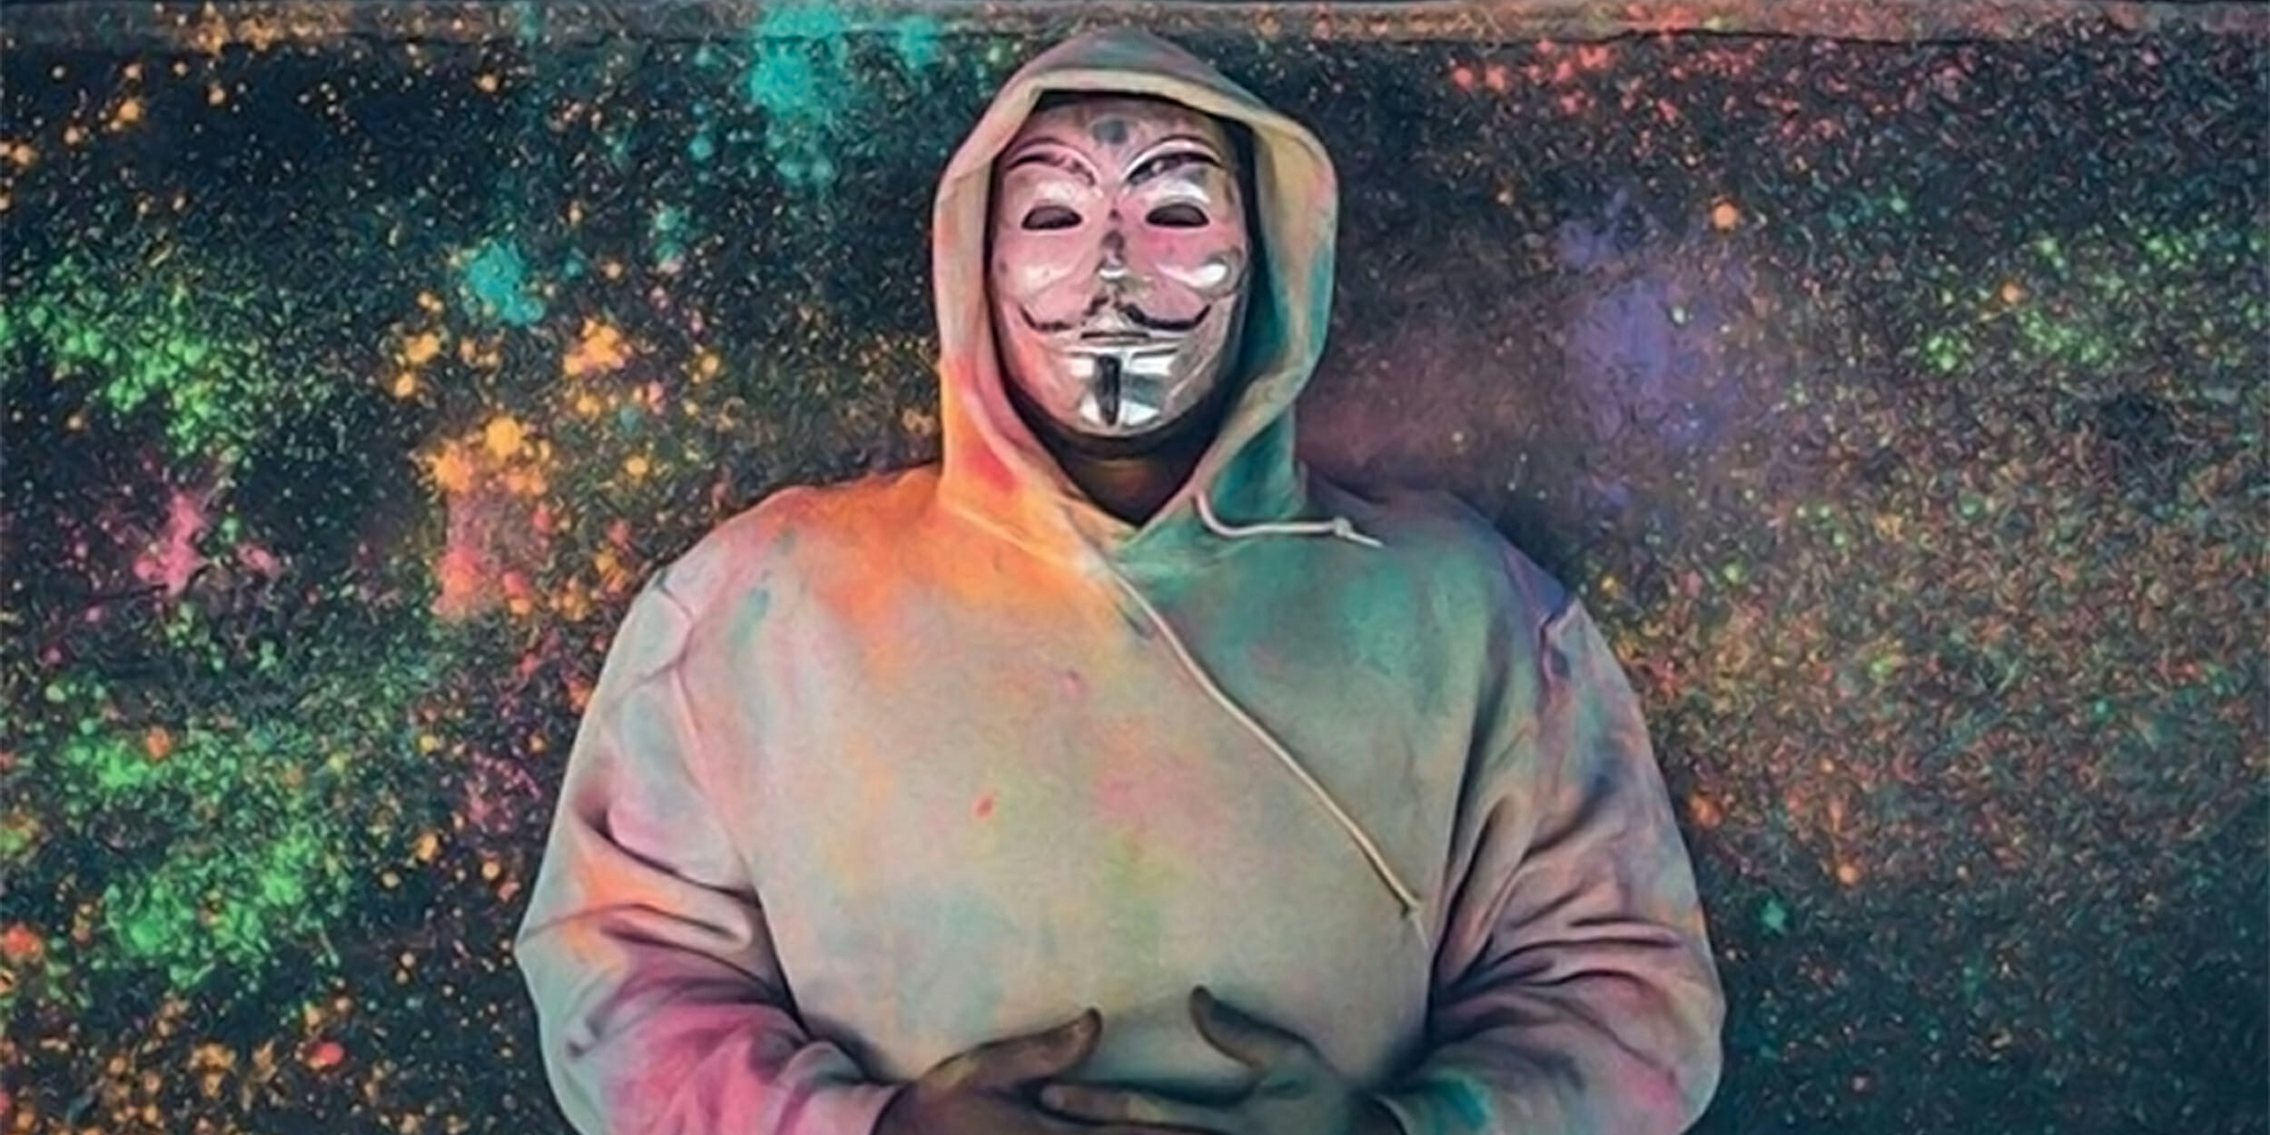 atticus guy fawkes mask graffiti artist